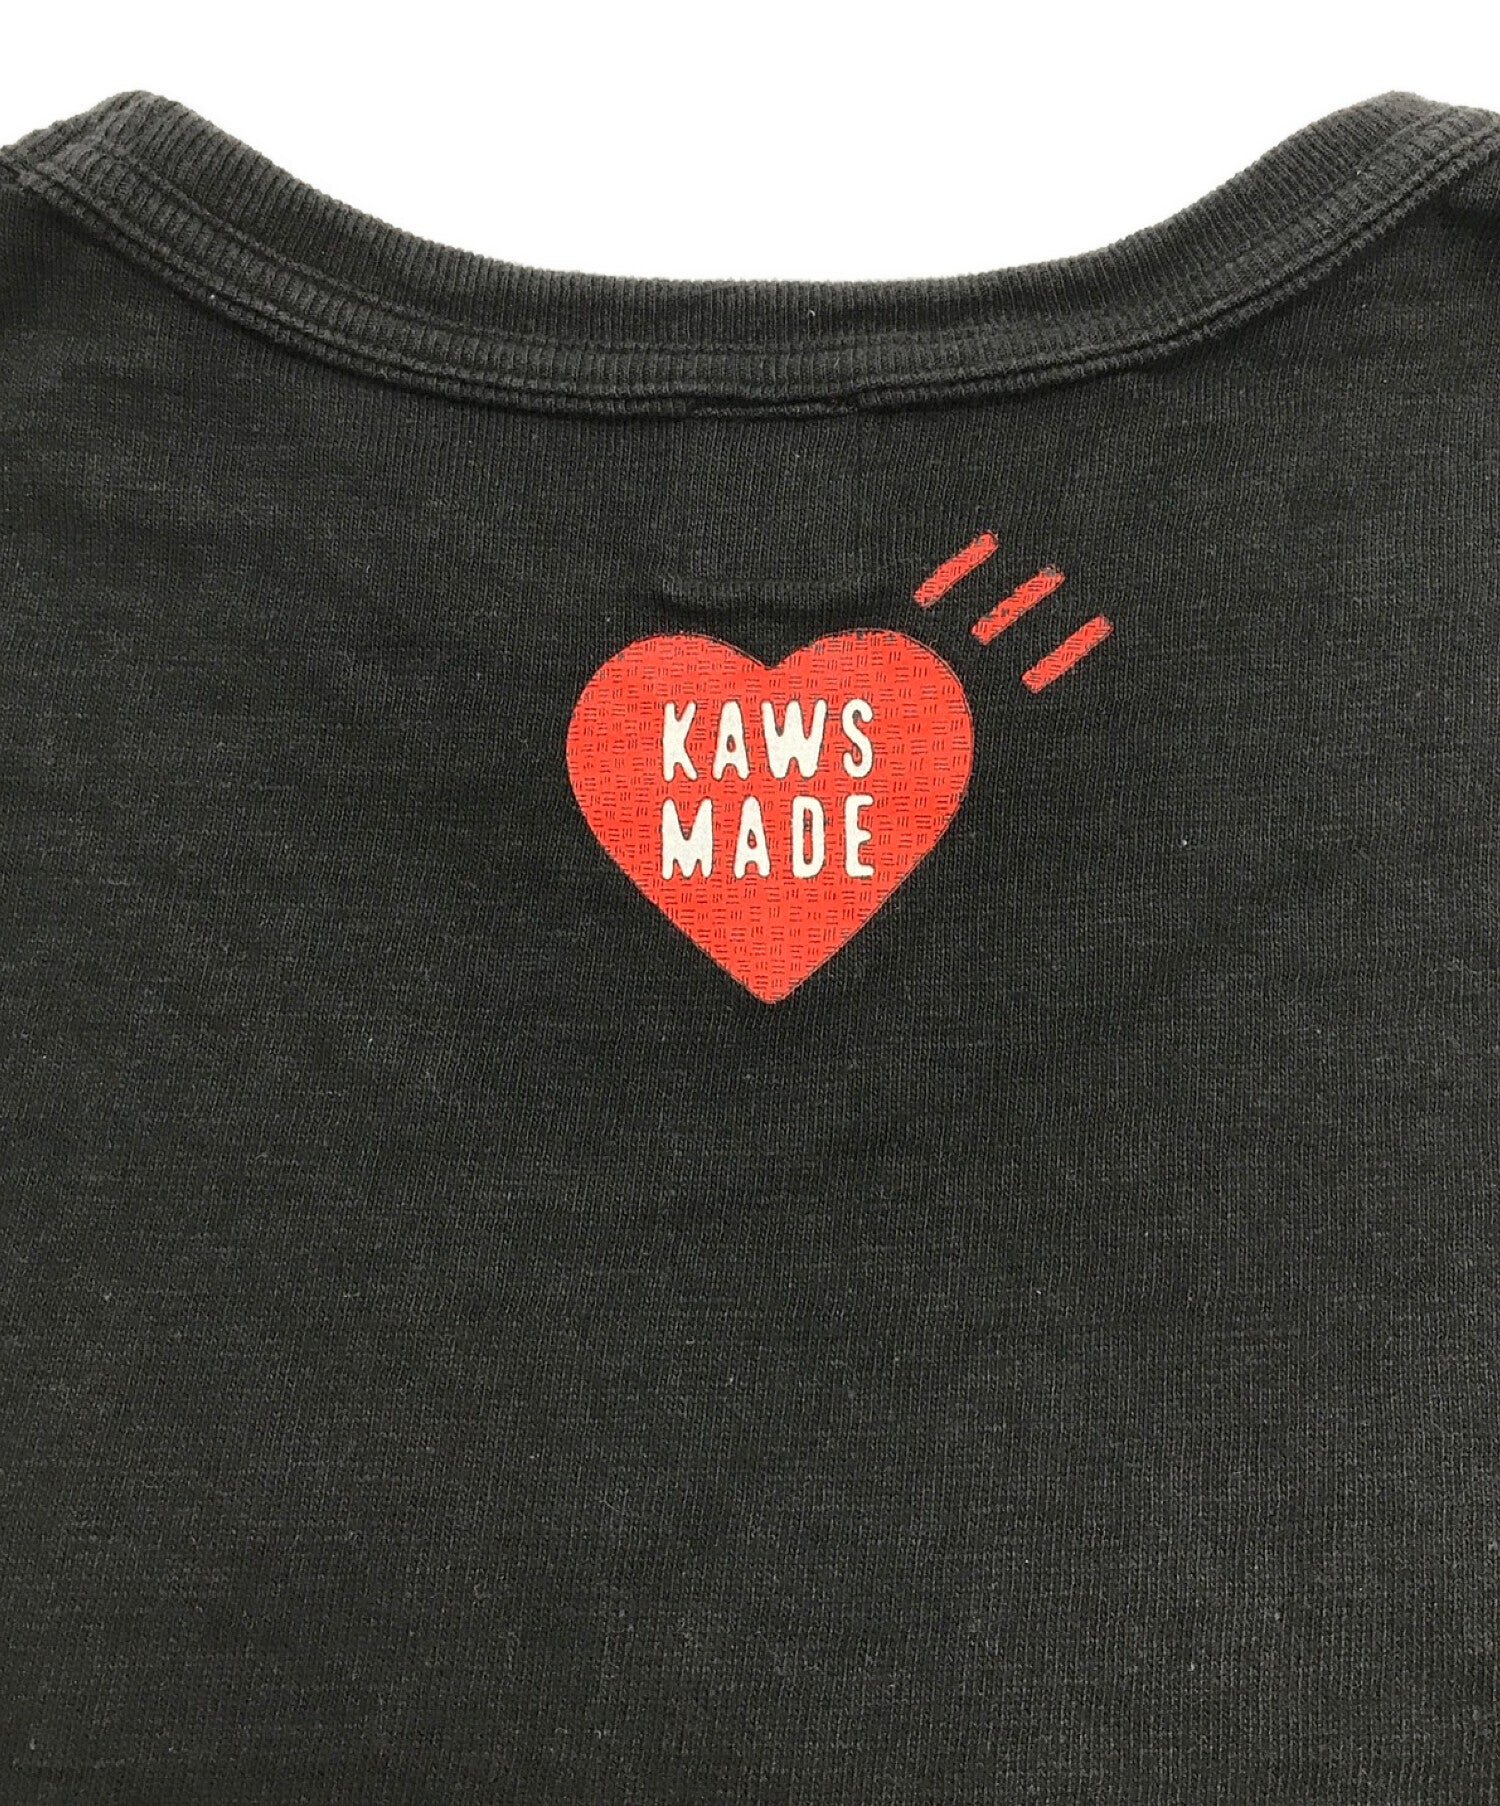 Human Made x Kaws #3 T-Shirt Black